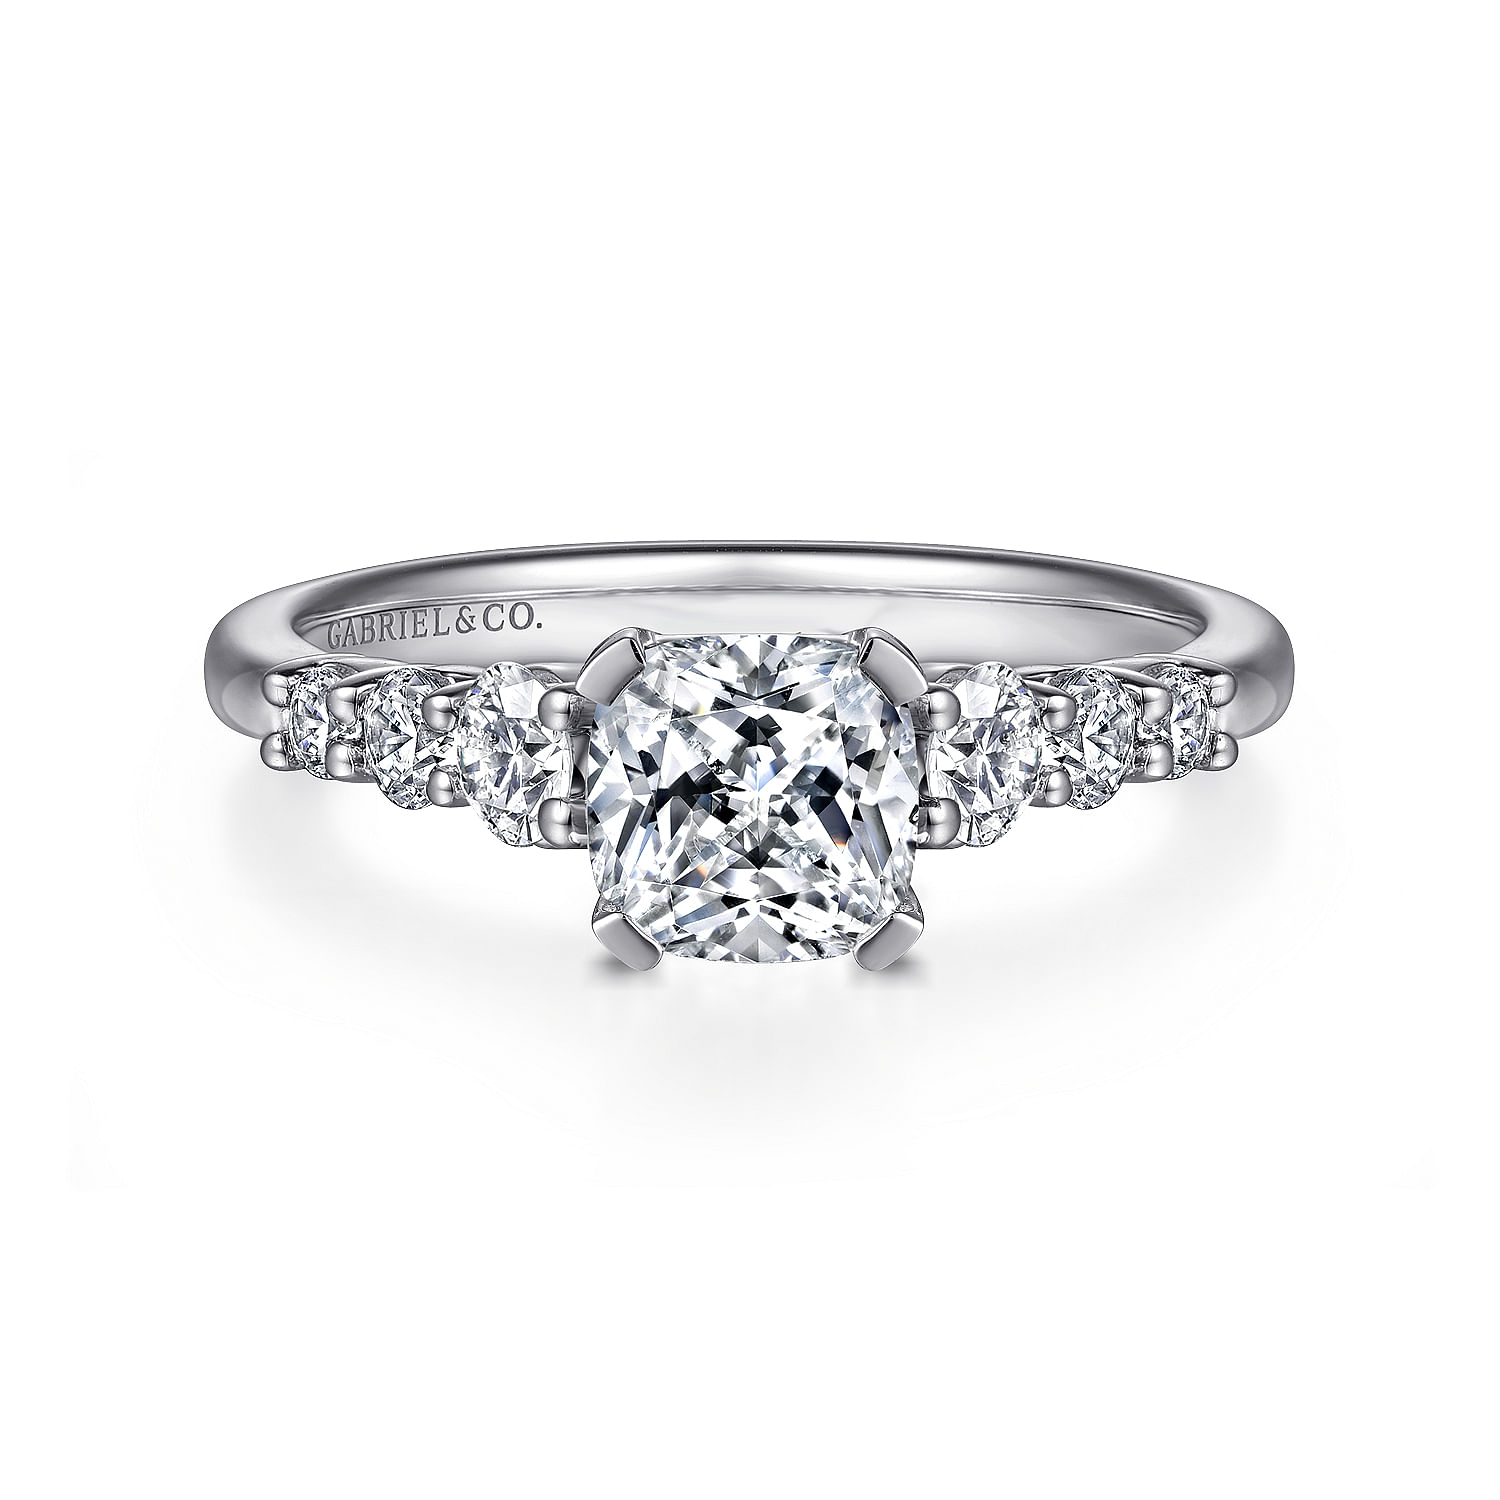 Darby - 14K White Gold Cushion Cut Diamond Engagement Ring